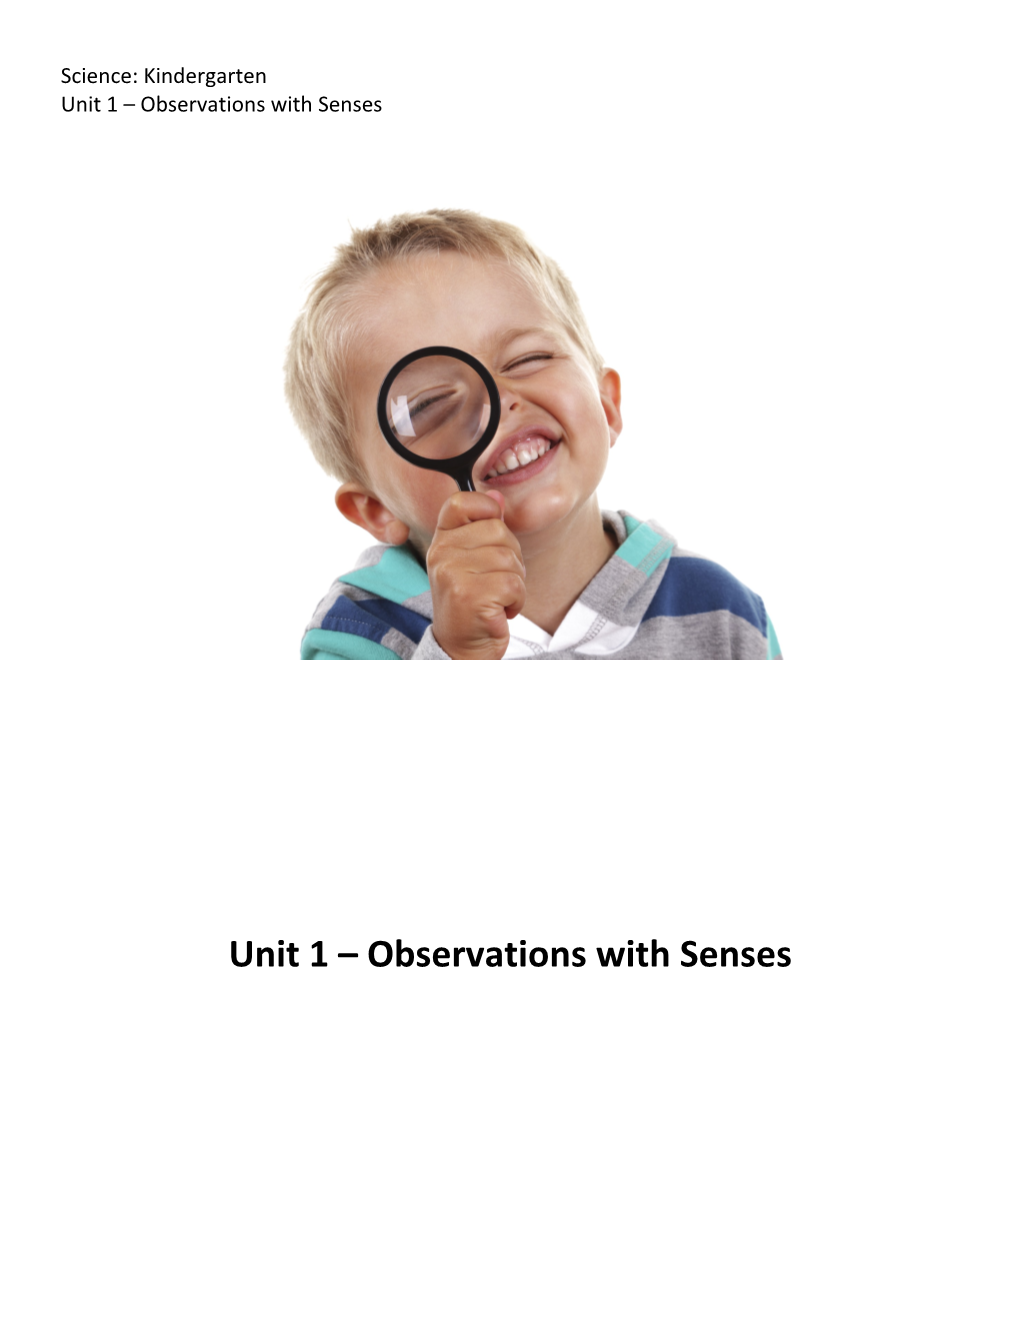 Unit 1 Observations with Senses